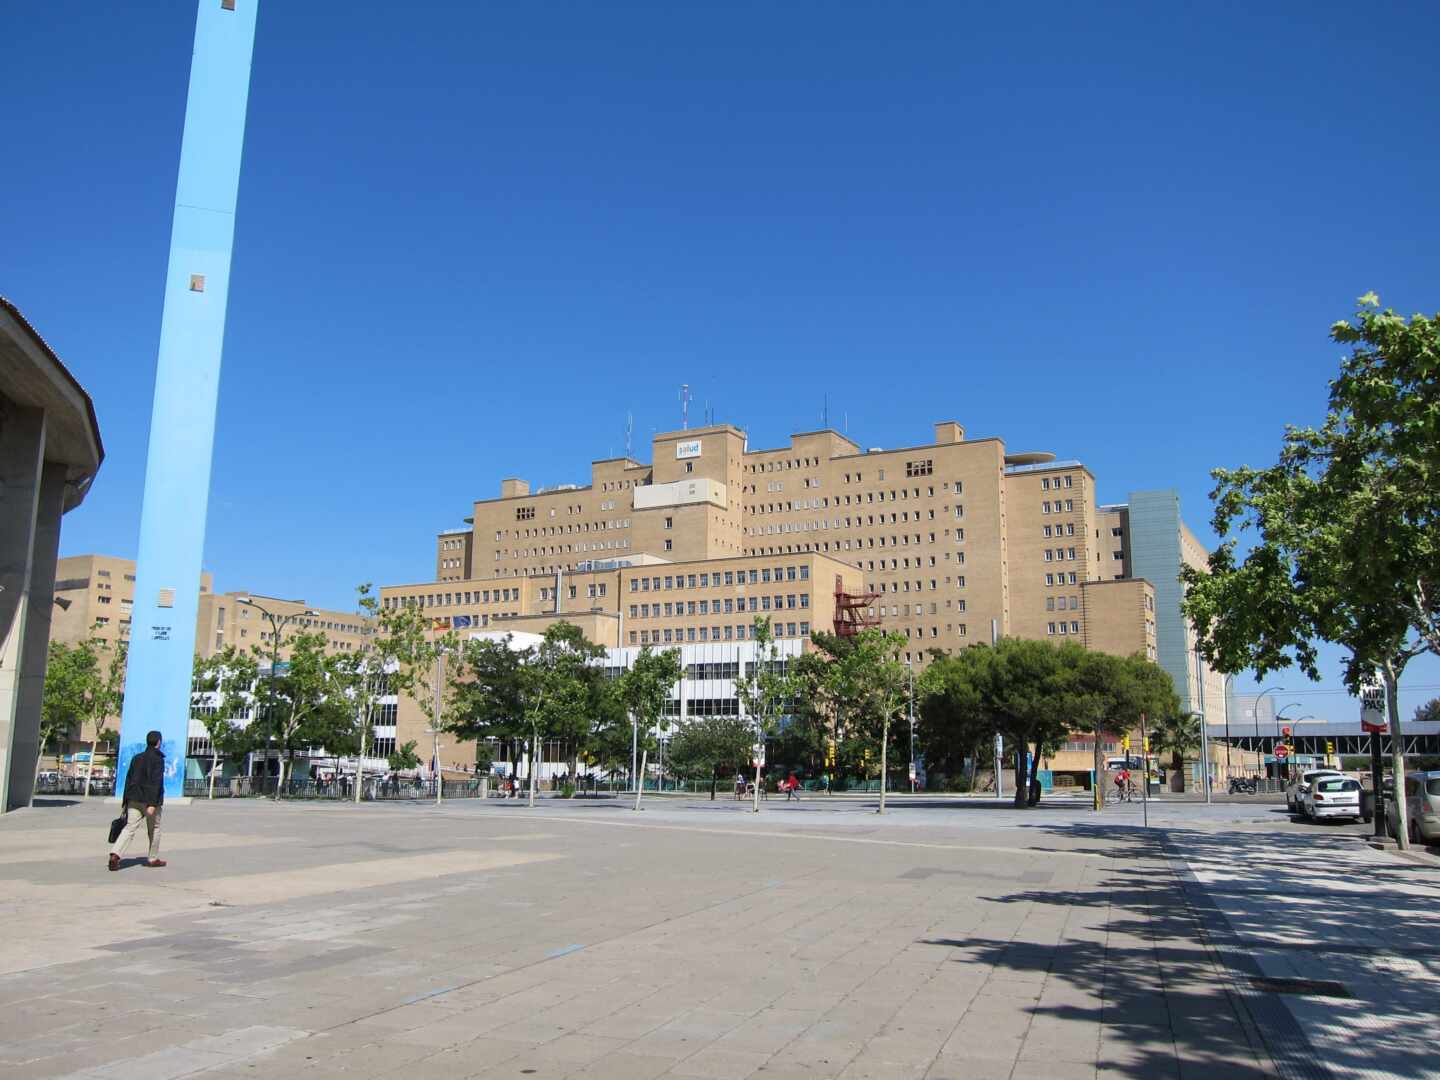 Hospital Miguel Servet, Zaragoza.